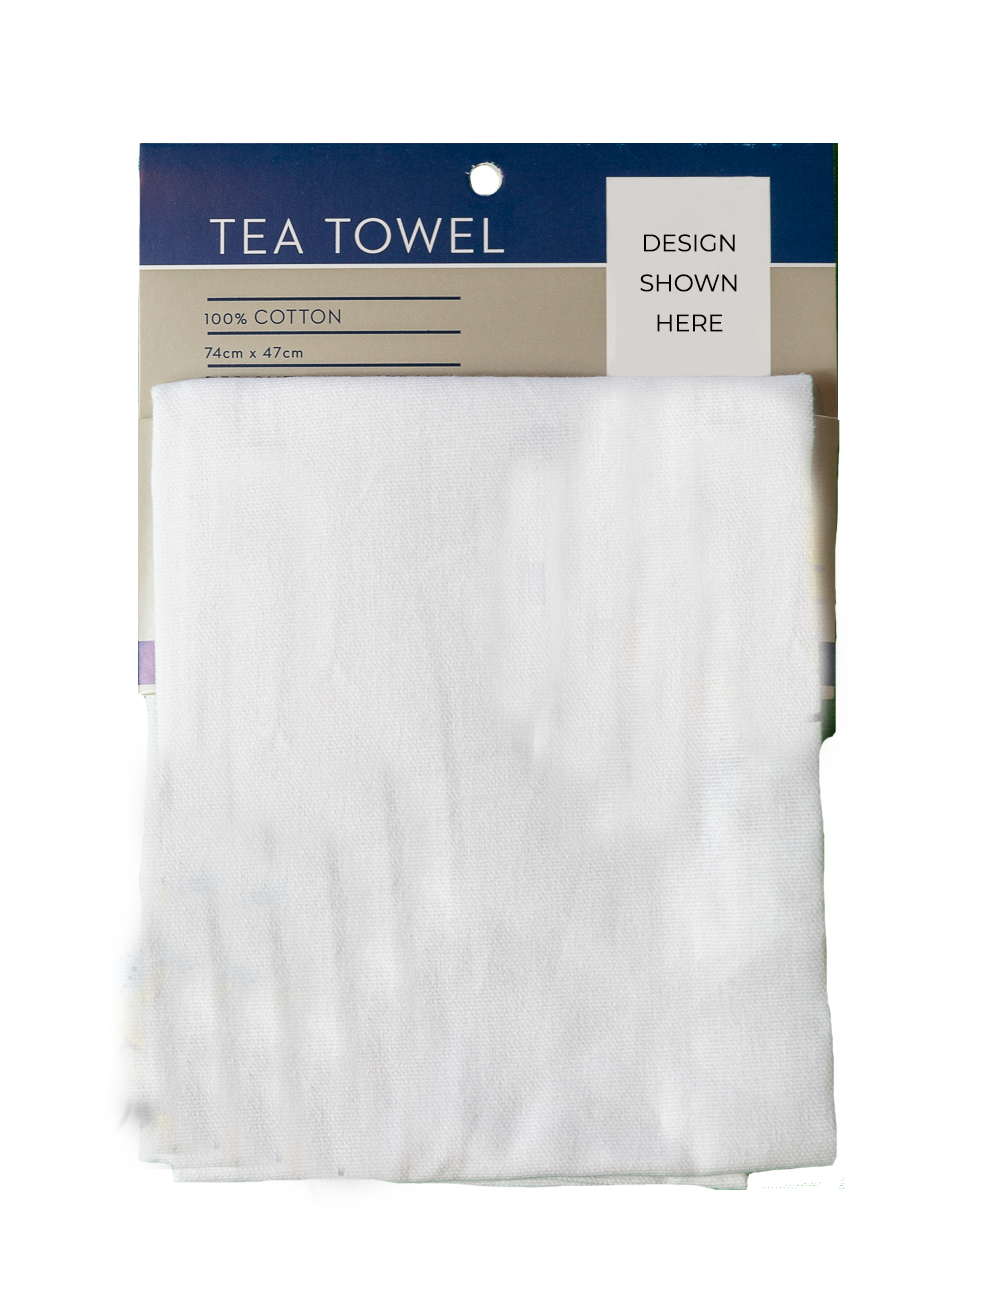 Tea Towel - Australian Animals